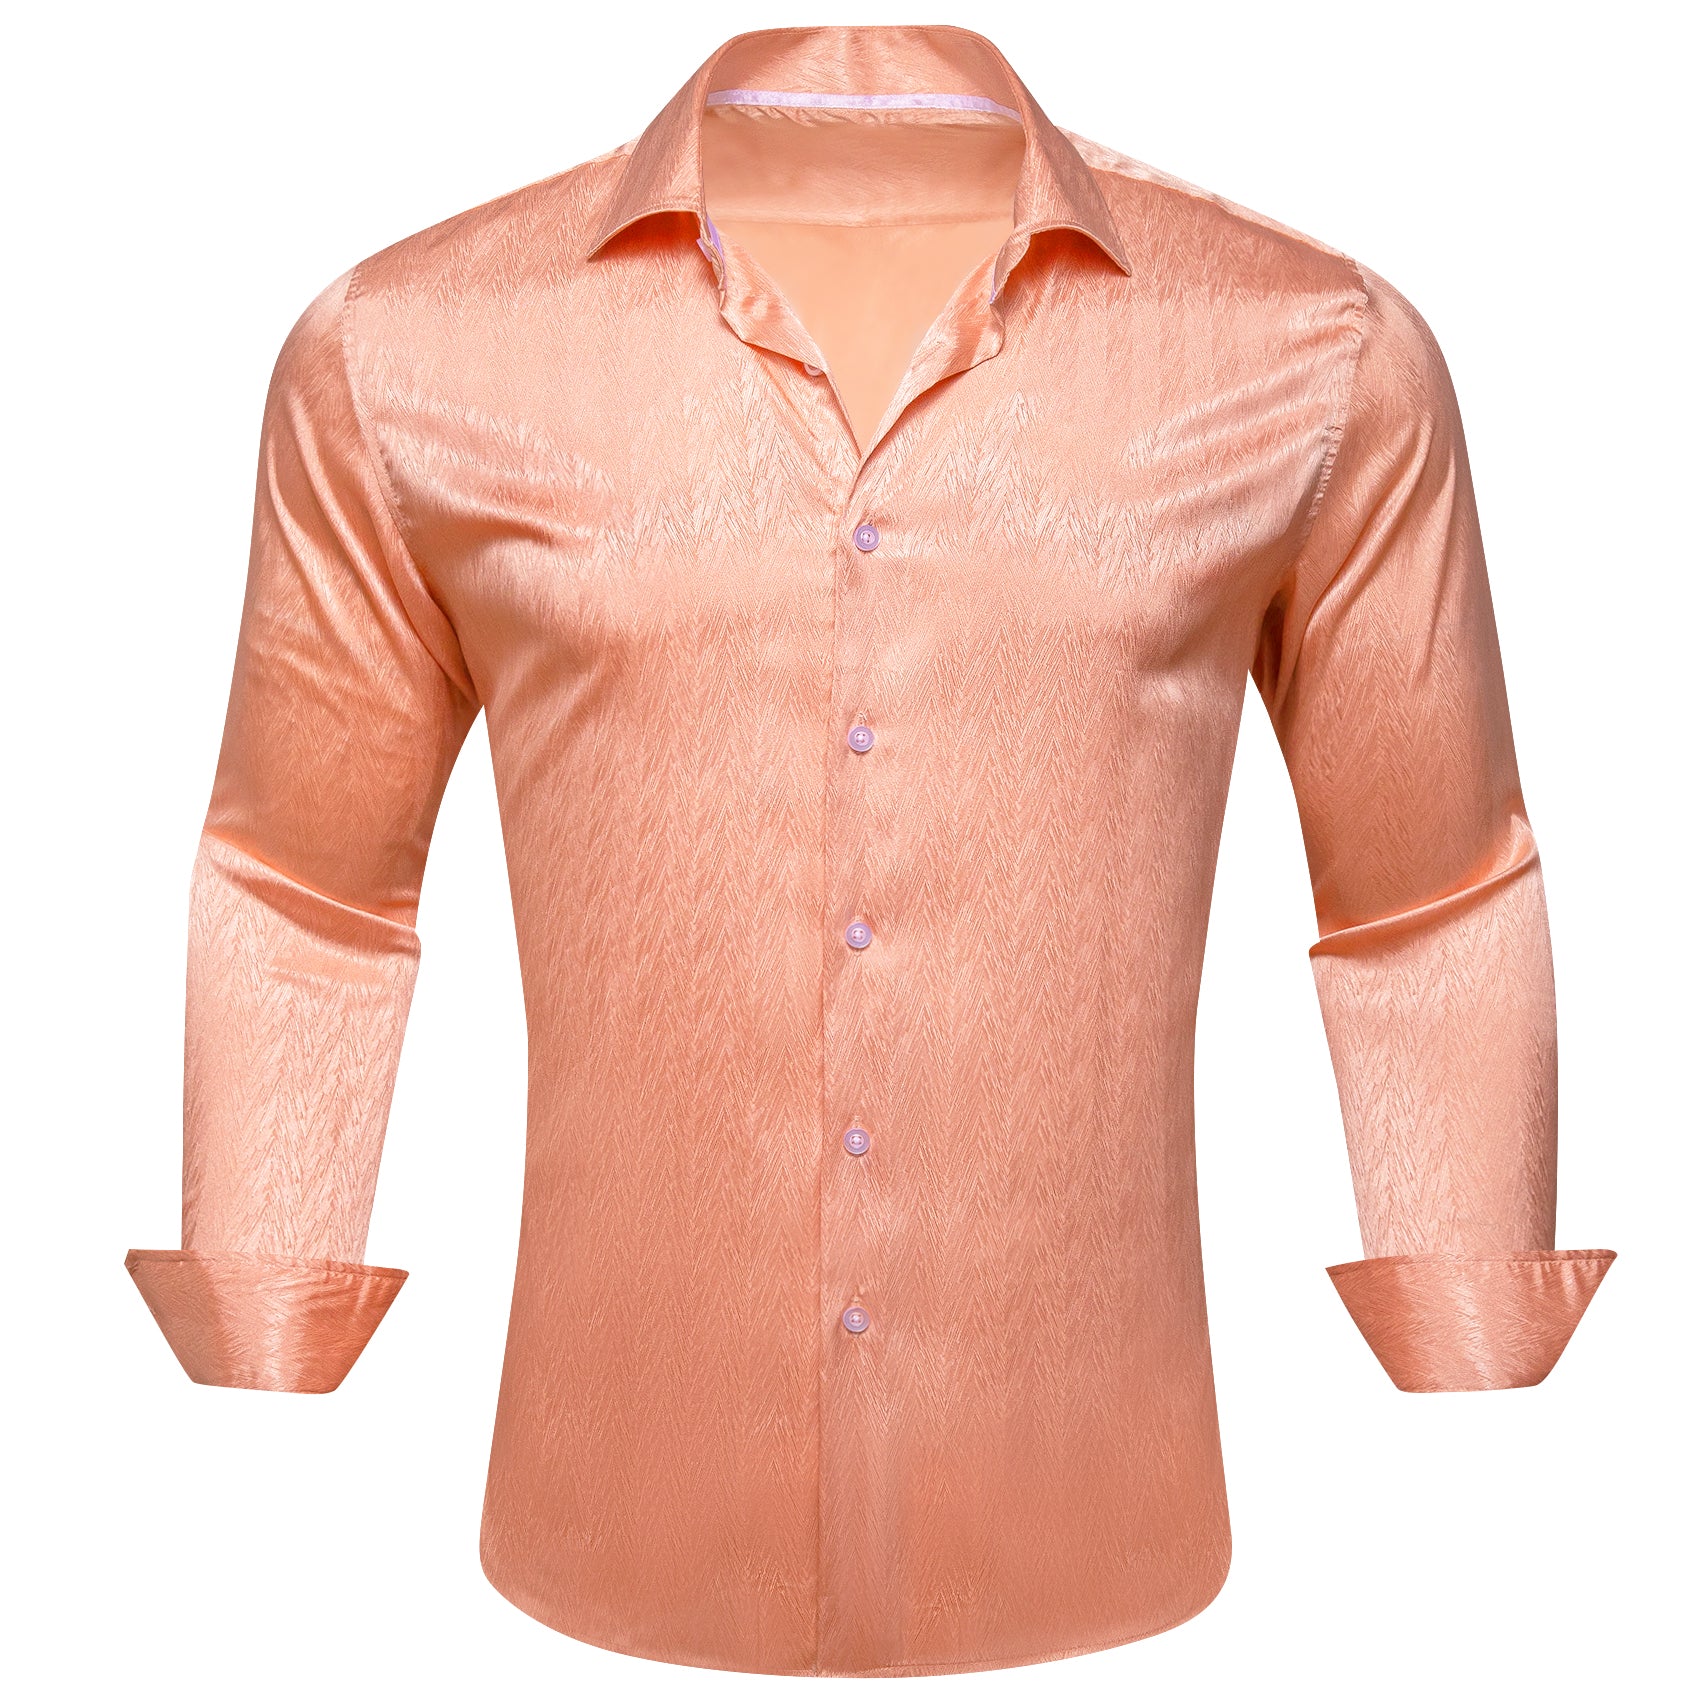 Barry.wang Pale Orange Solid Silk Men's Shirt